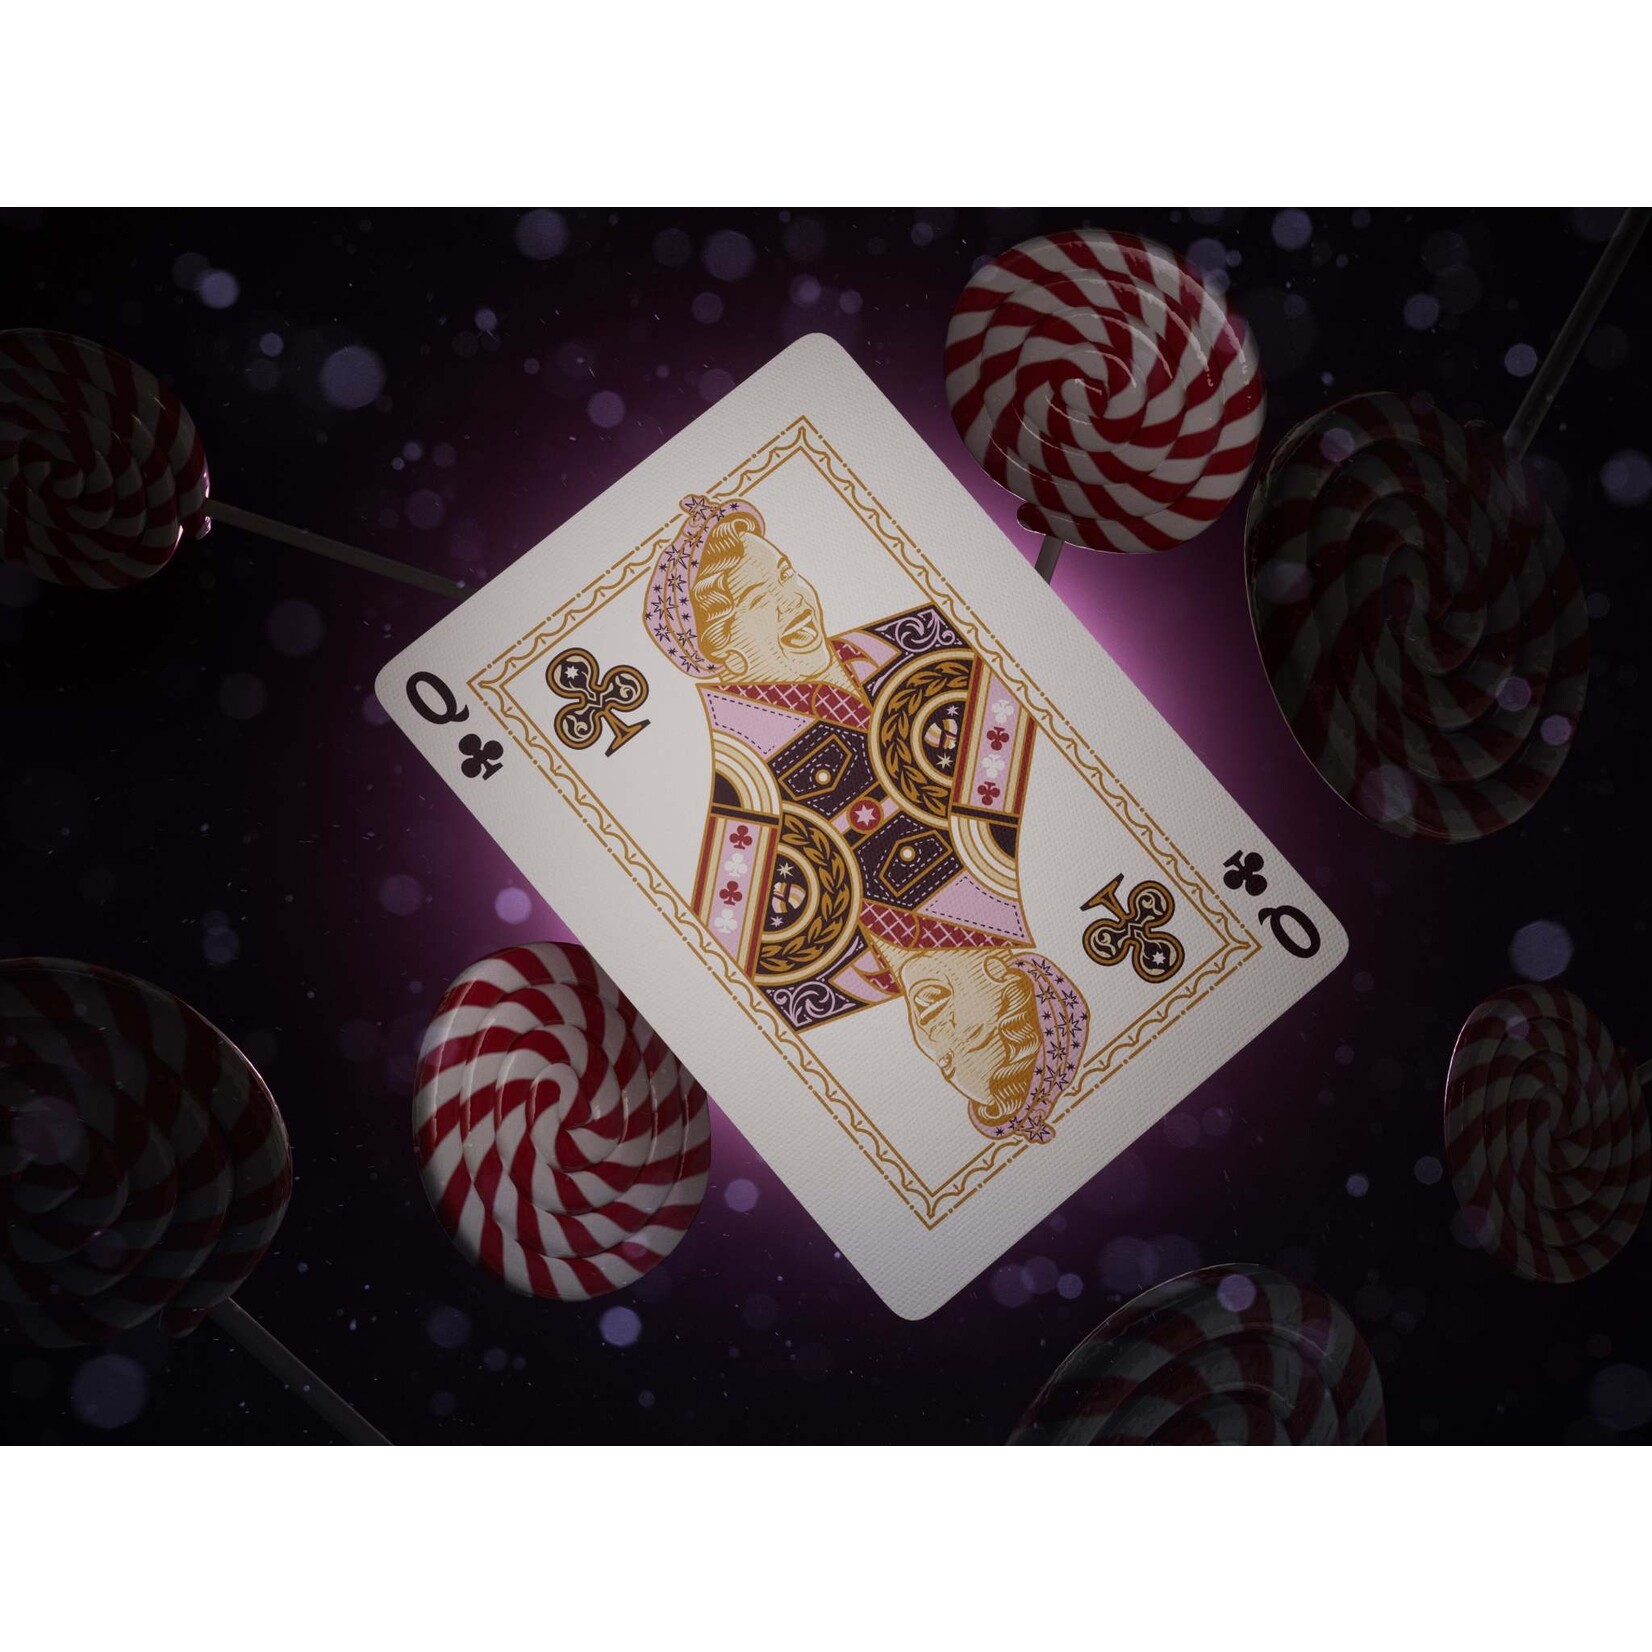 theory11 Wonka Playing Cards